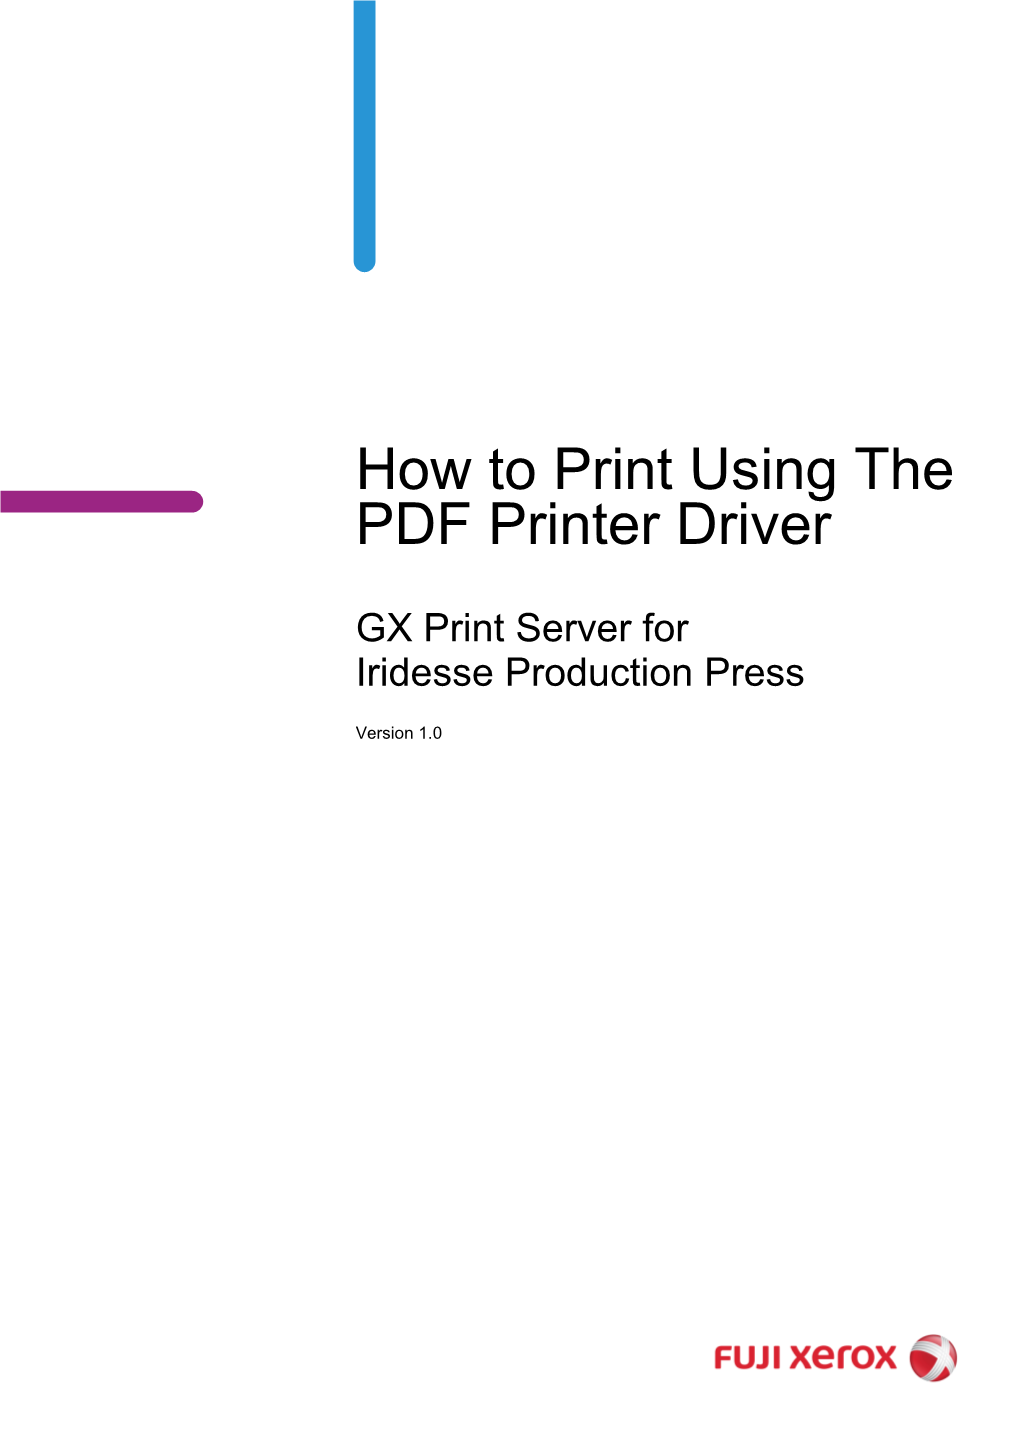 How to Print Using the PDF Printer Driver